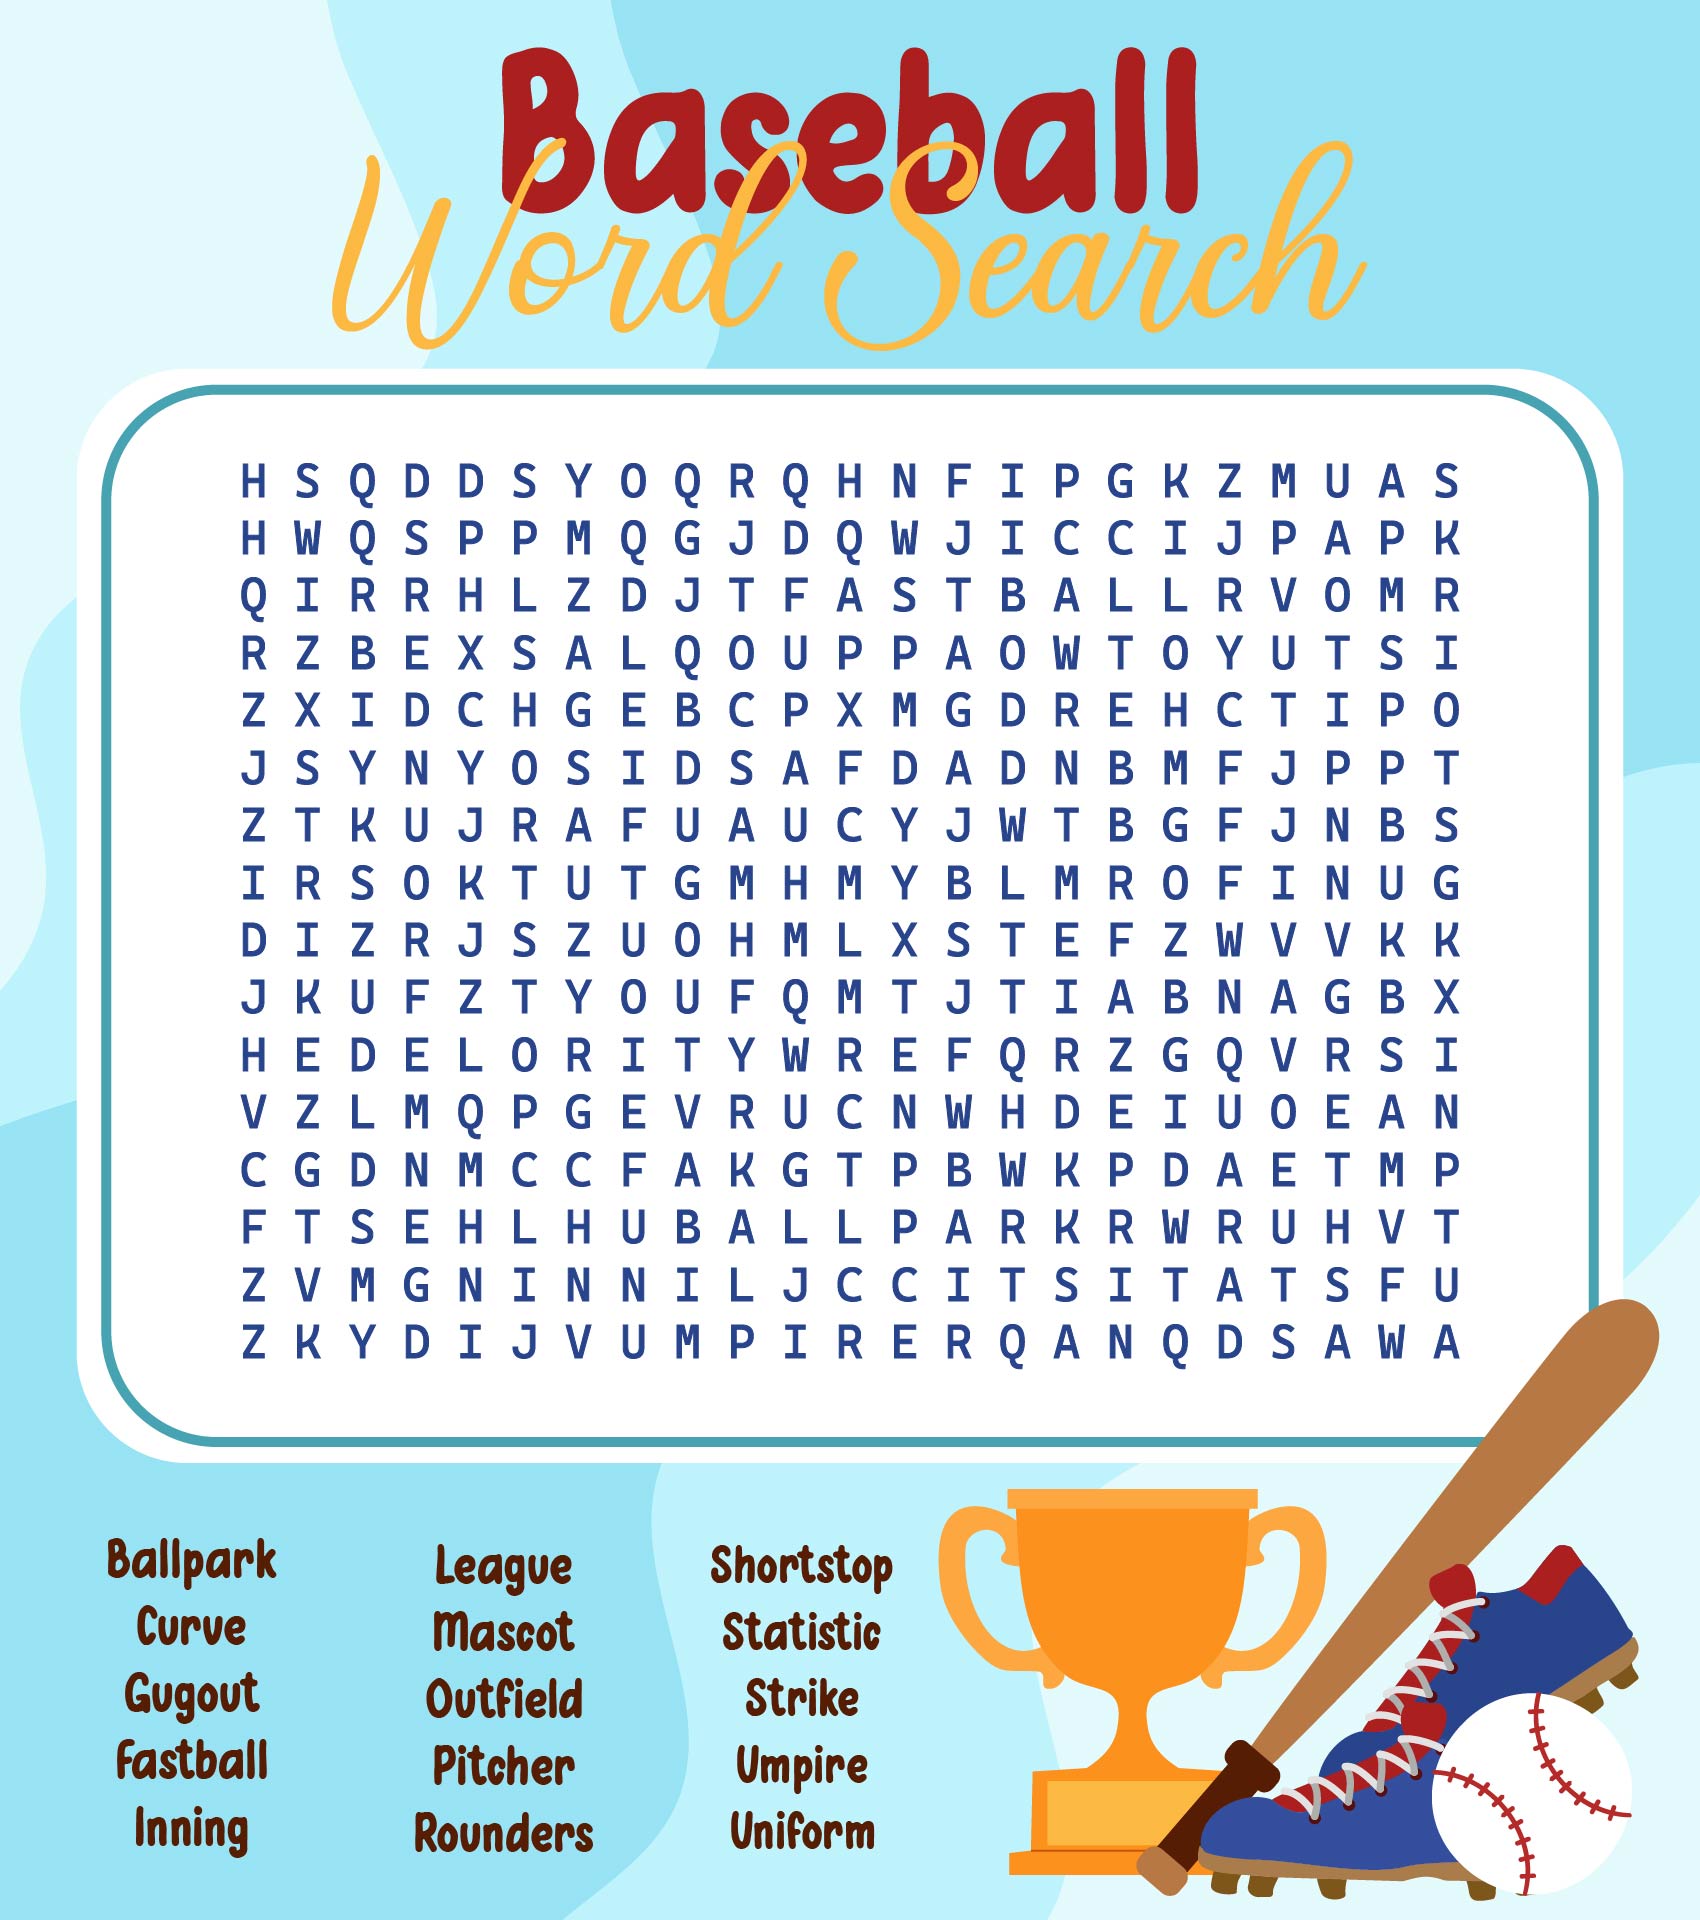 Baseball Word Search Puzzles Printable